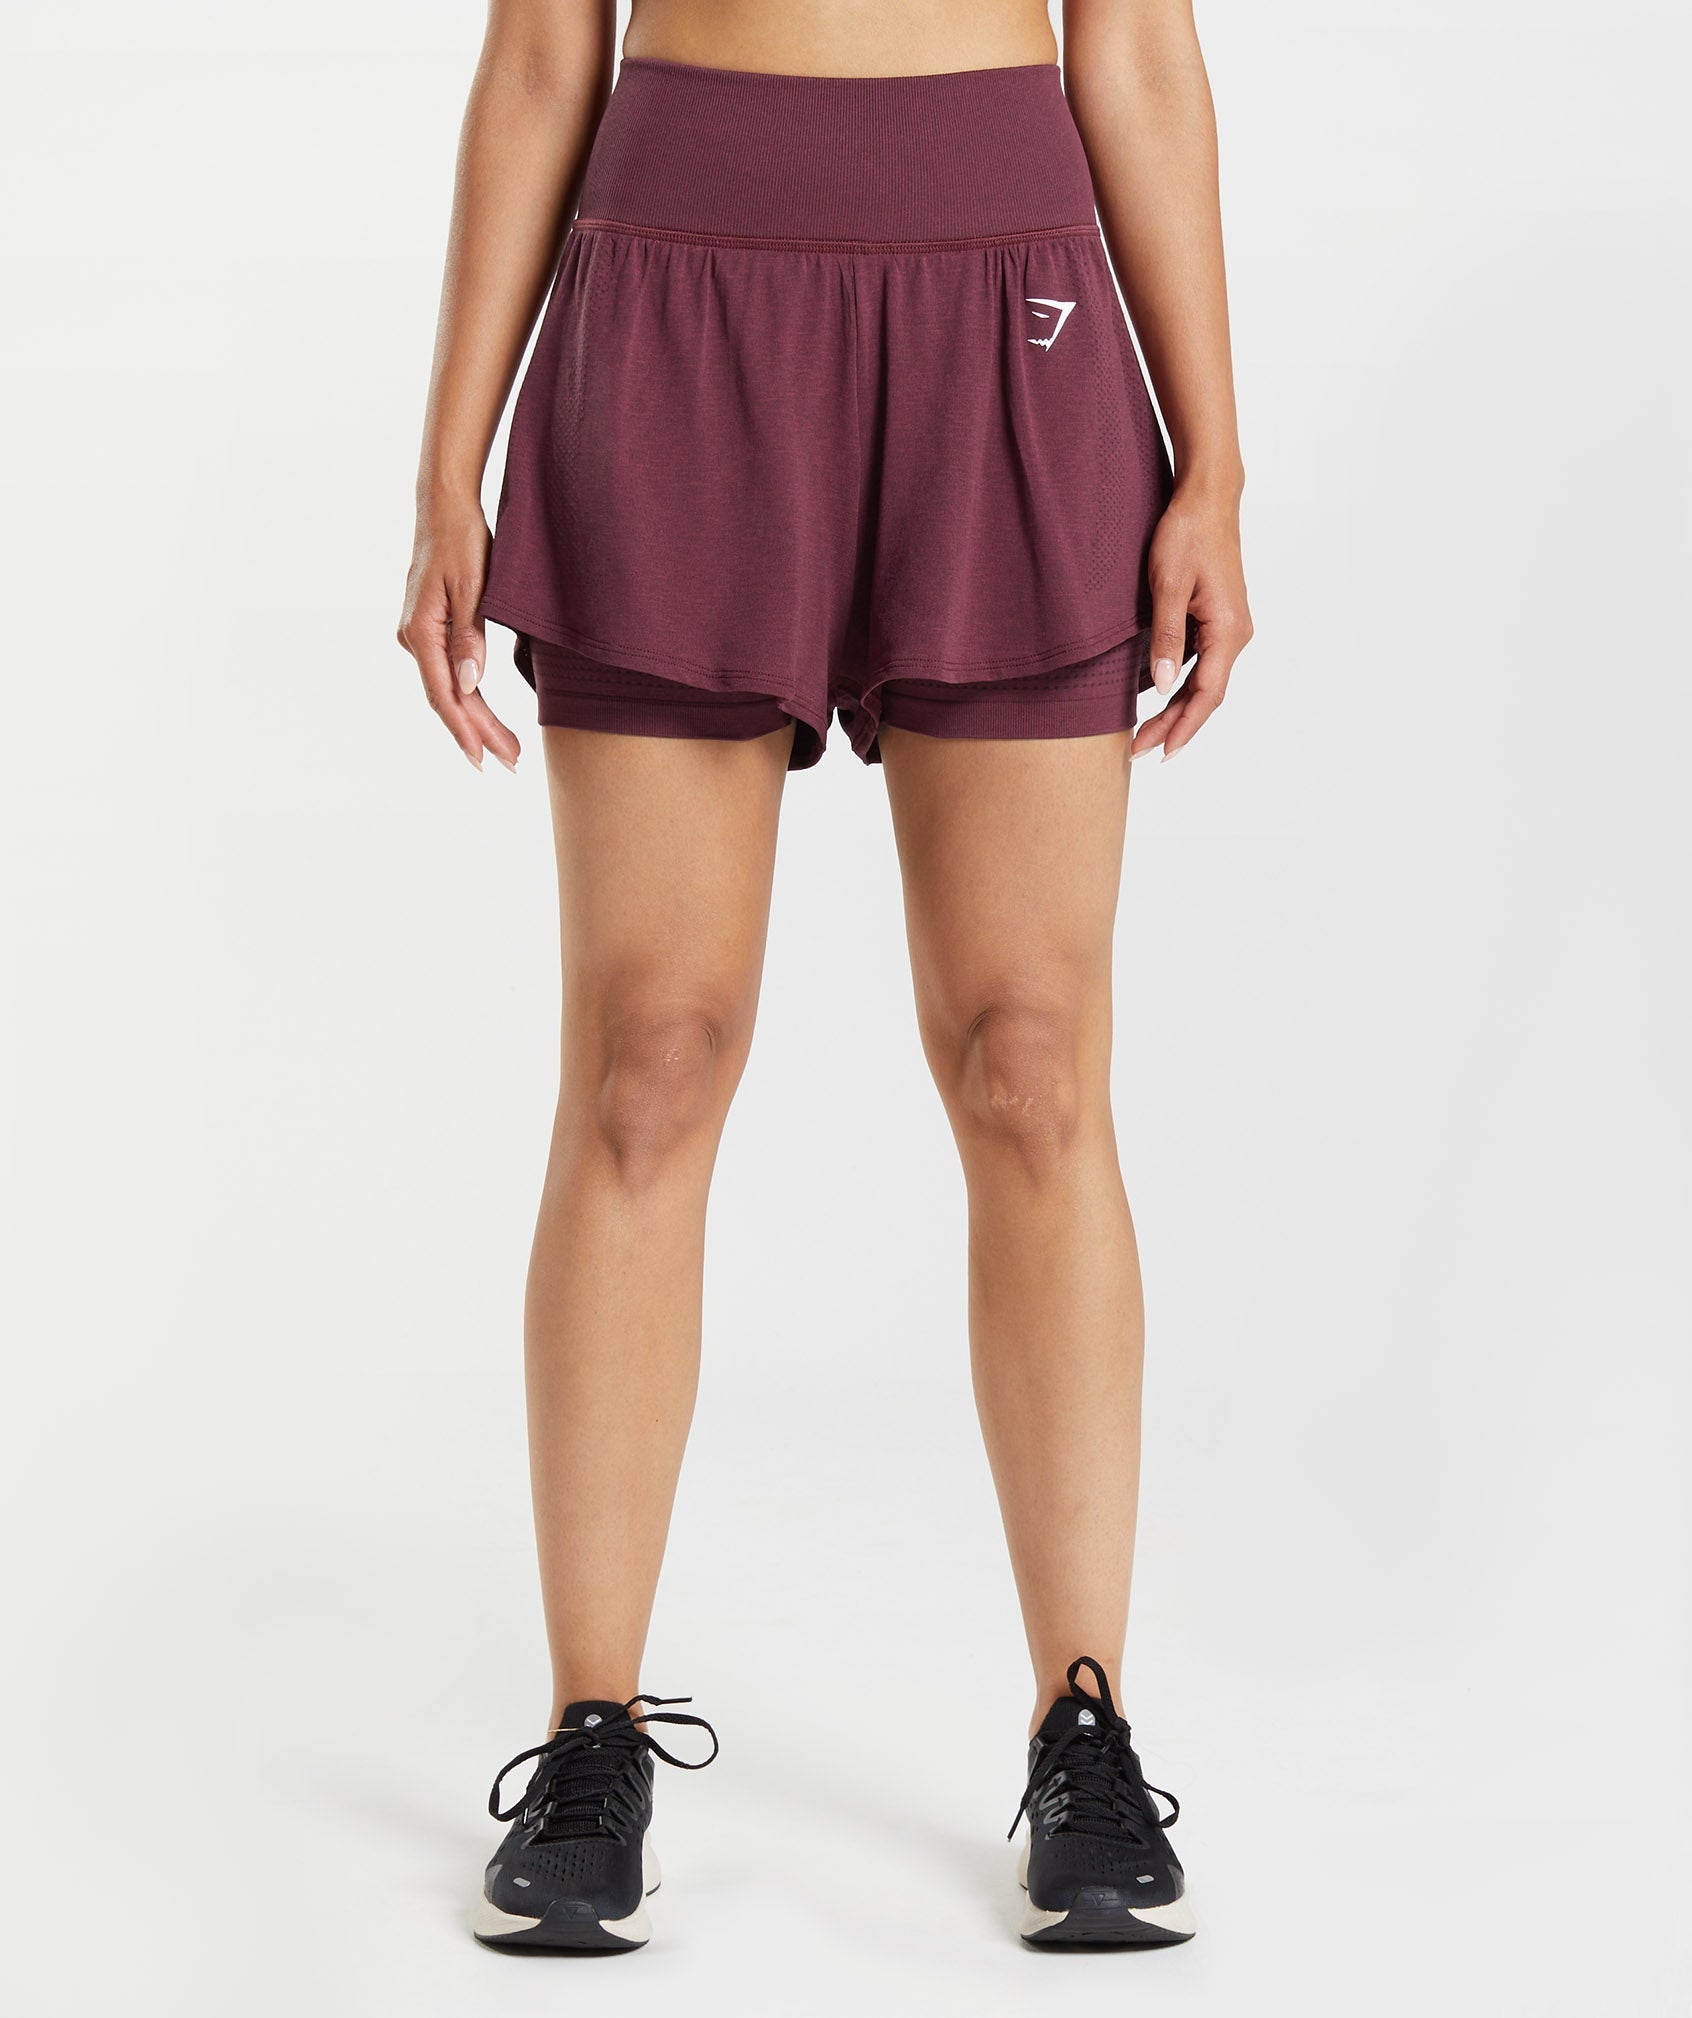 Gymshark Apex Seamless shorts. Size Medium in purple.